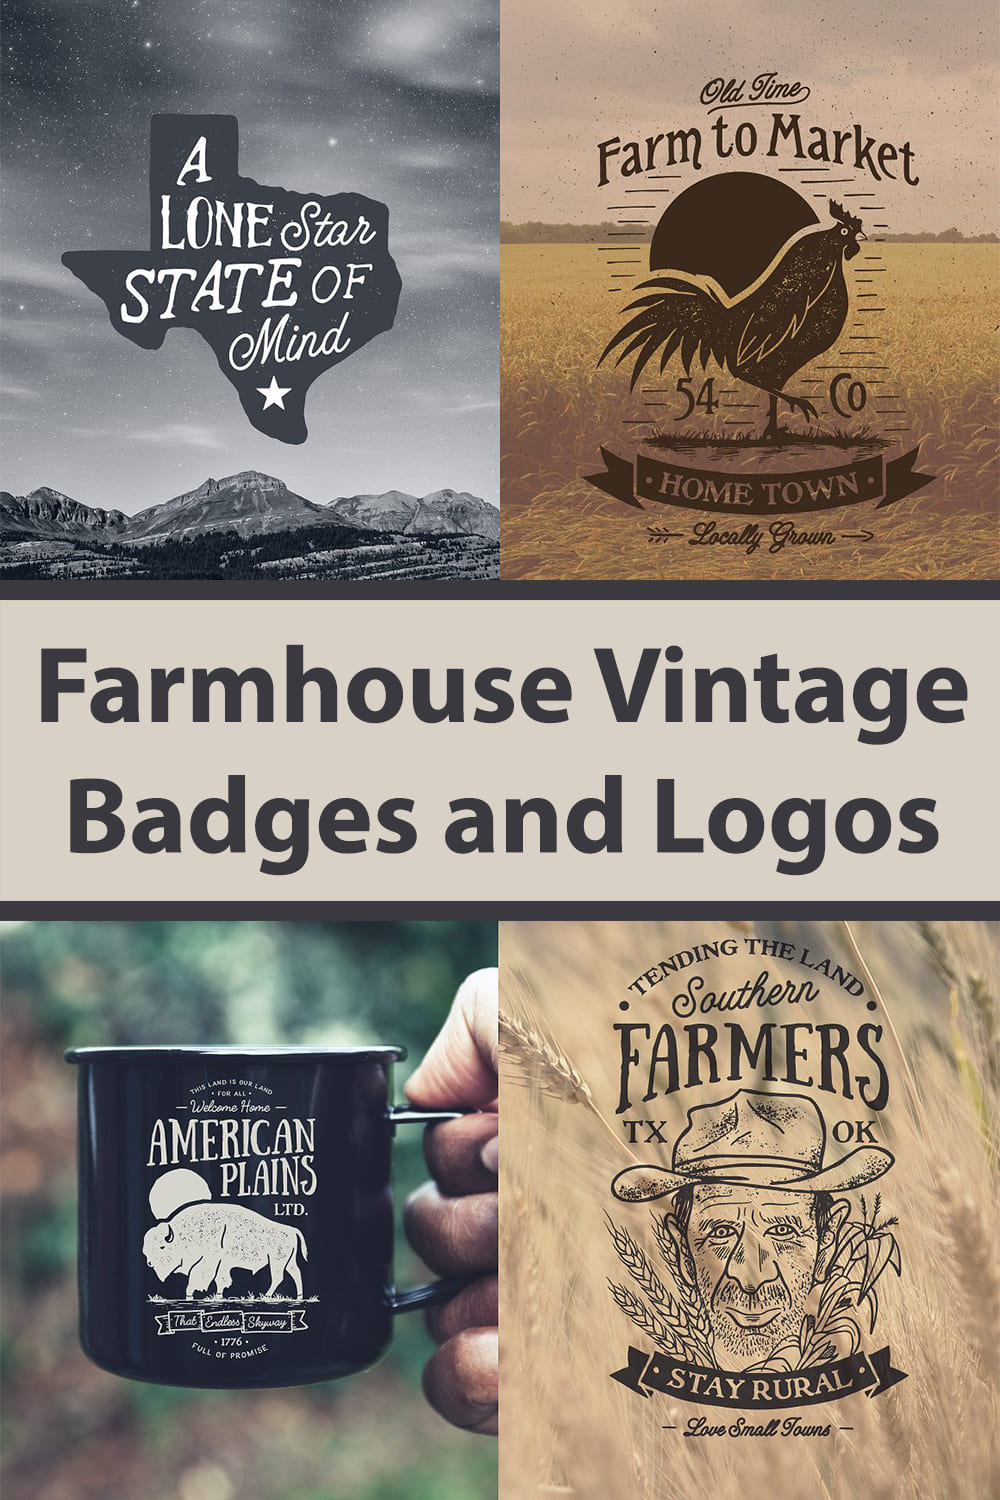 Farmhouse Vintage Badges and Logos - Pinterest.